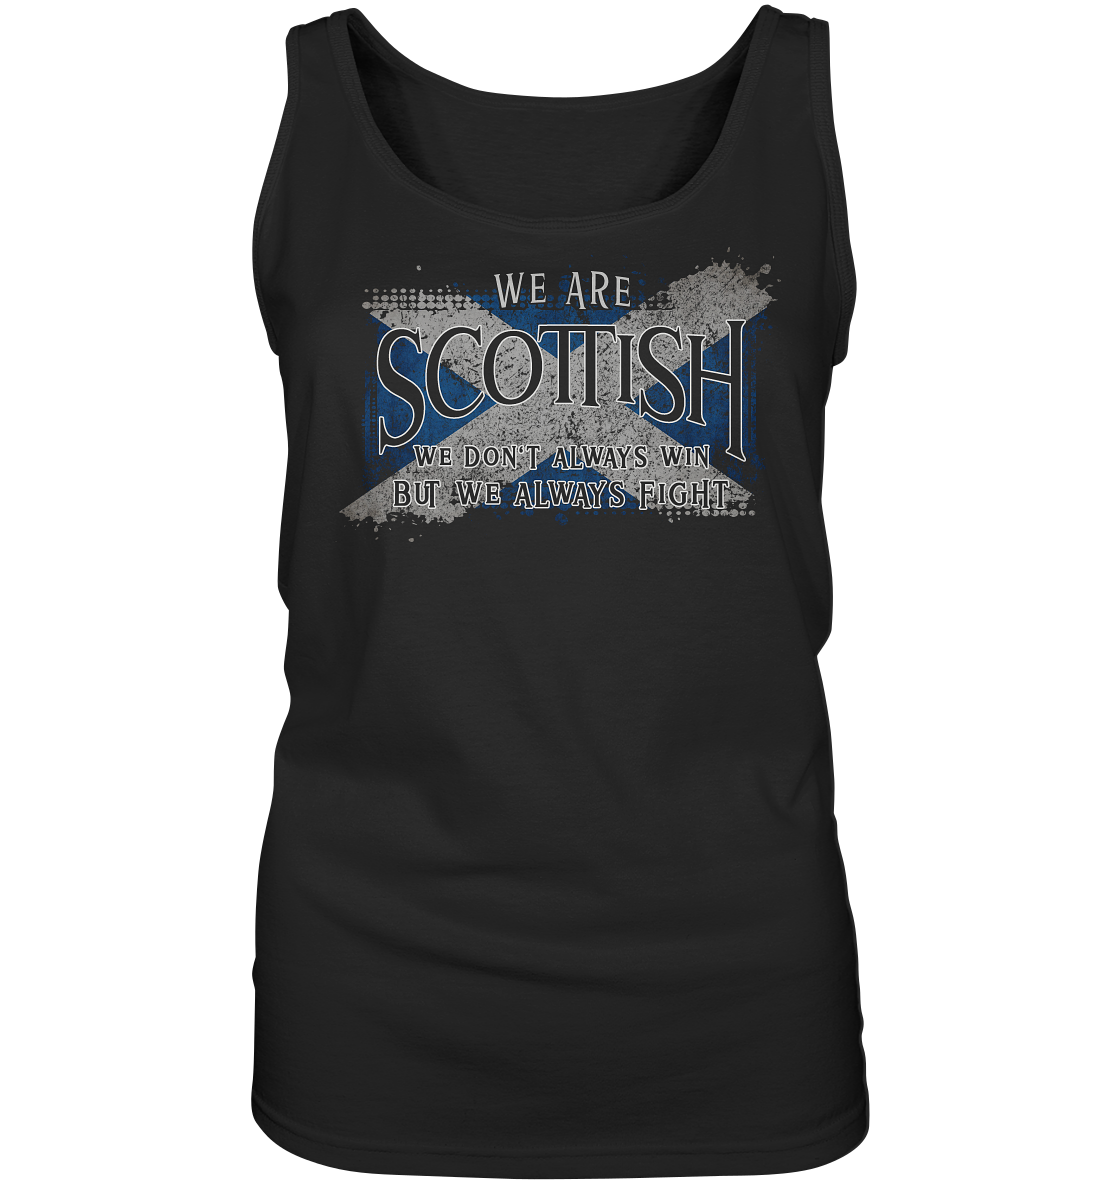 We Are Scottish "We Always Fight" - Ladies Tank-Top